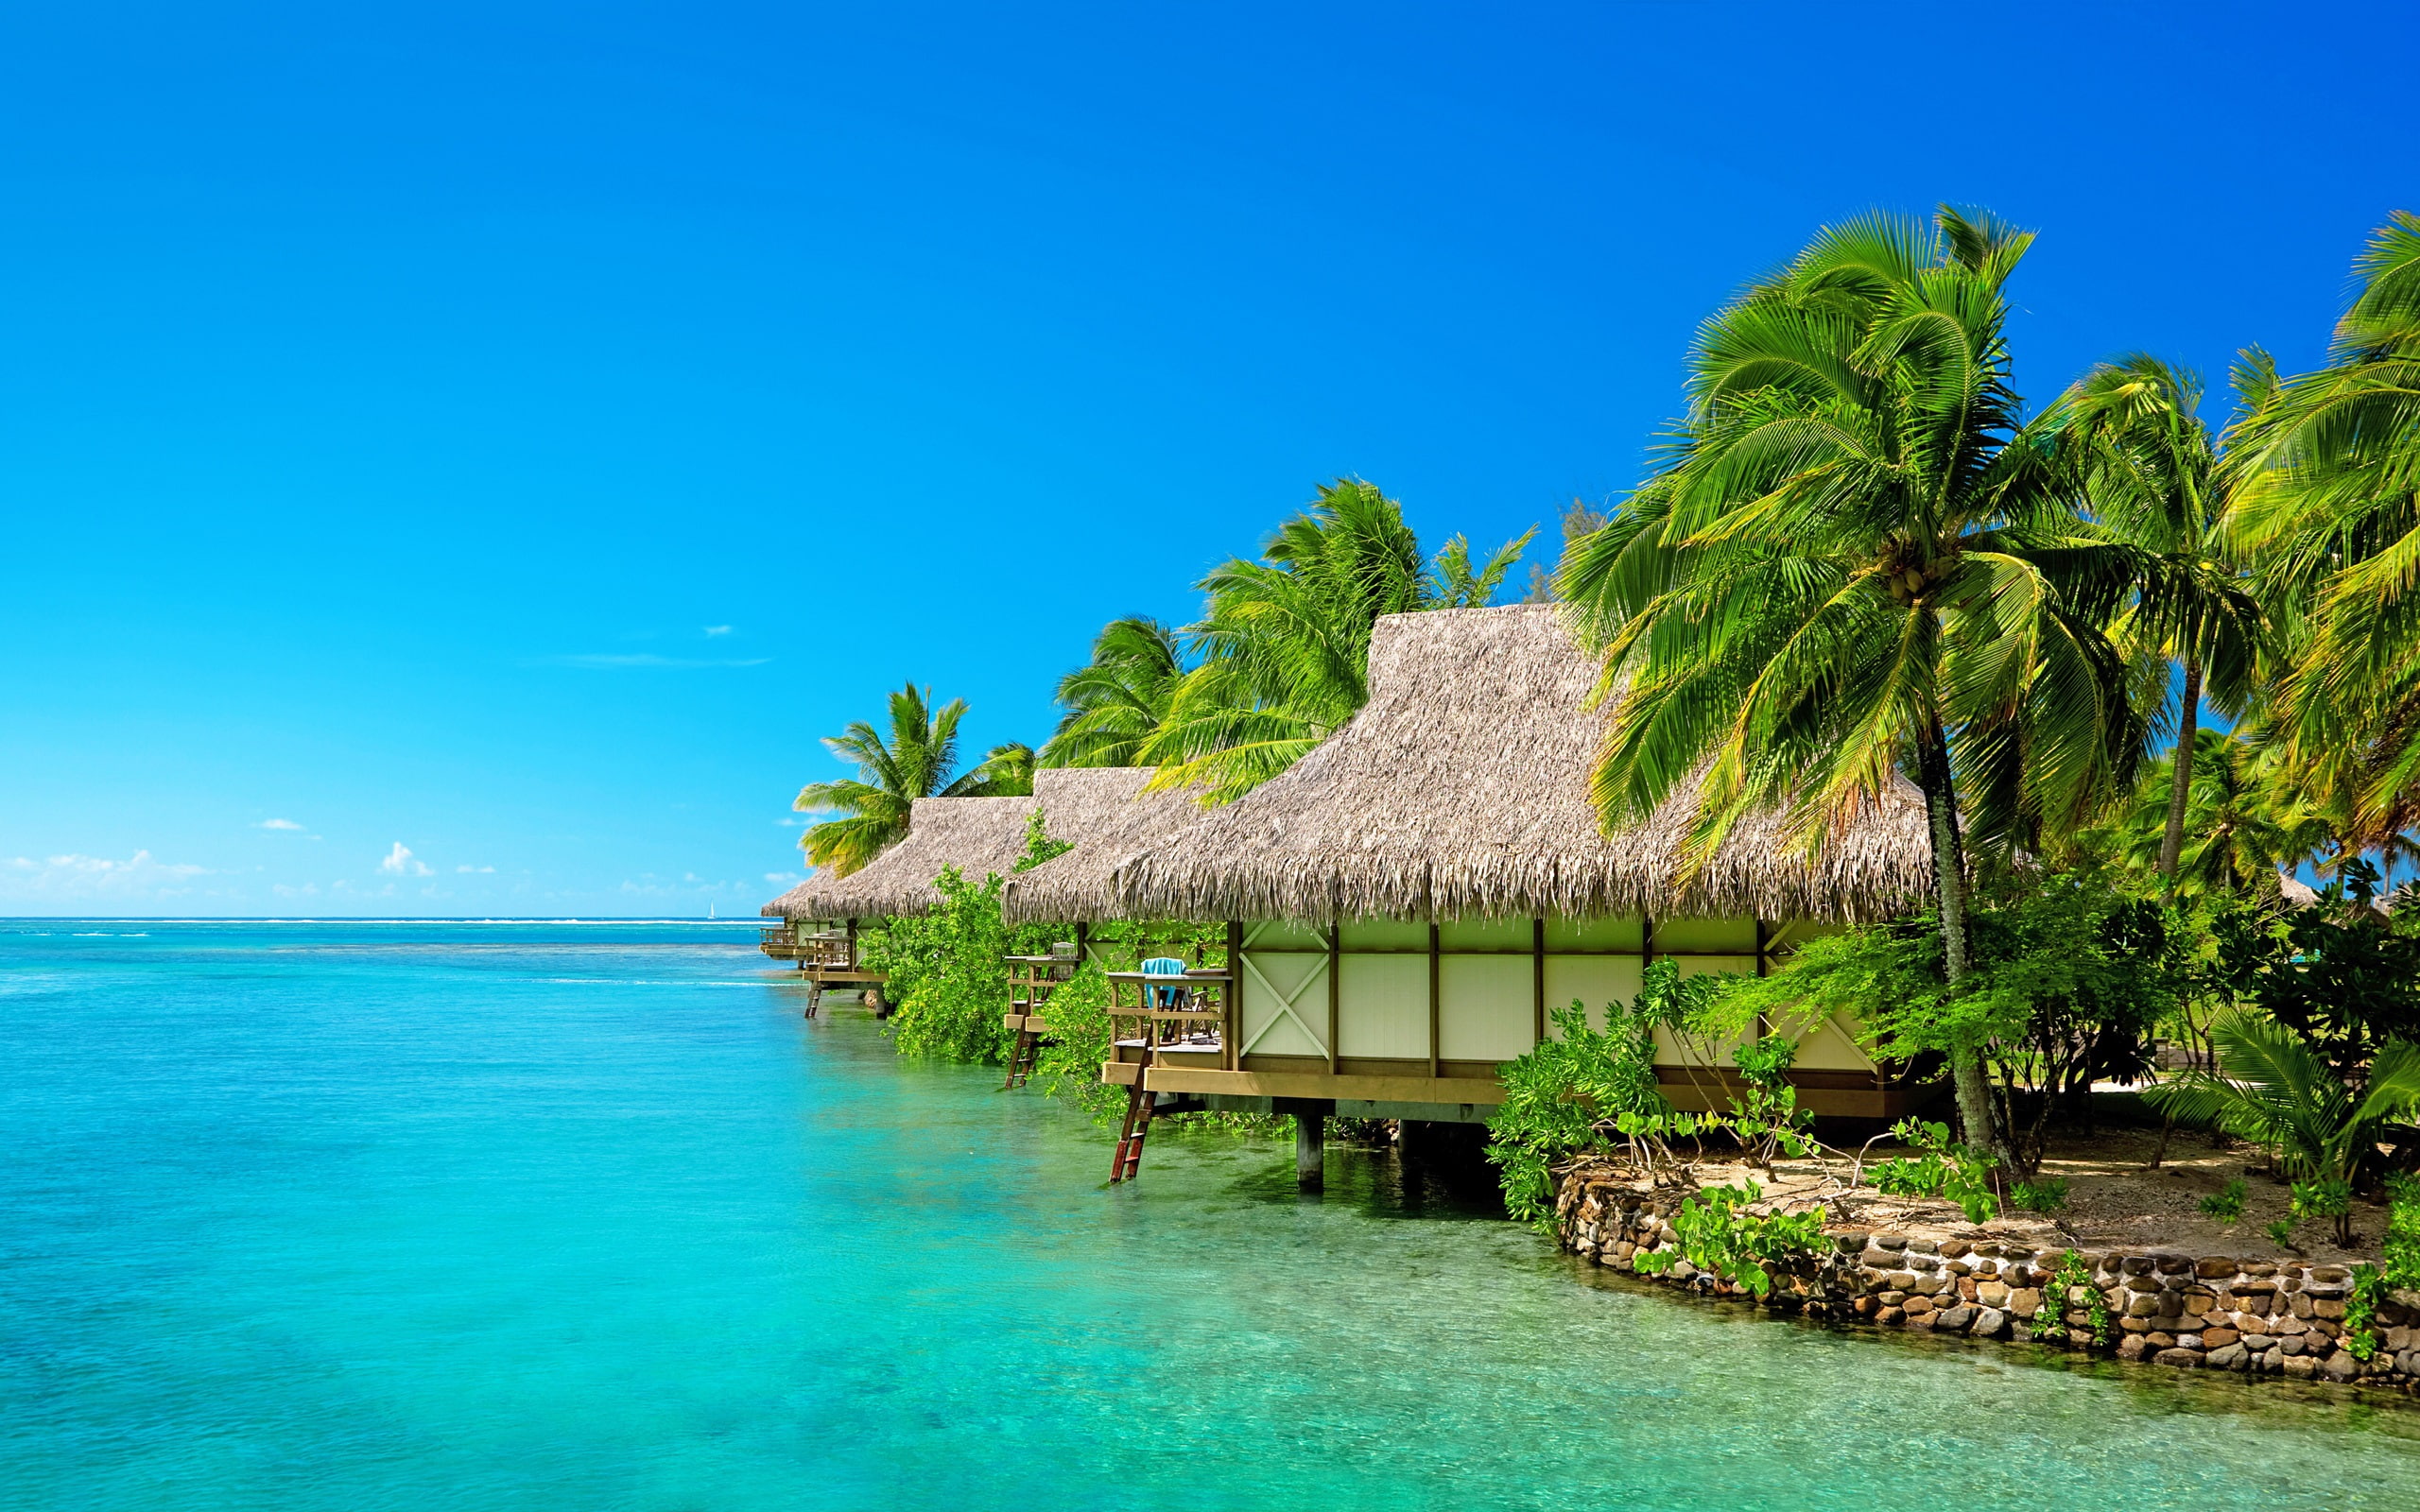 Sea, blue sky, resort, bungalow, palm trees, beach, brown and white hut on seashore